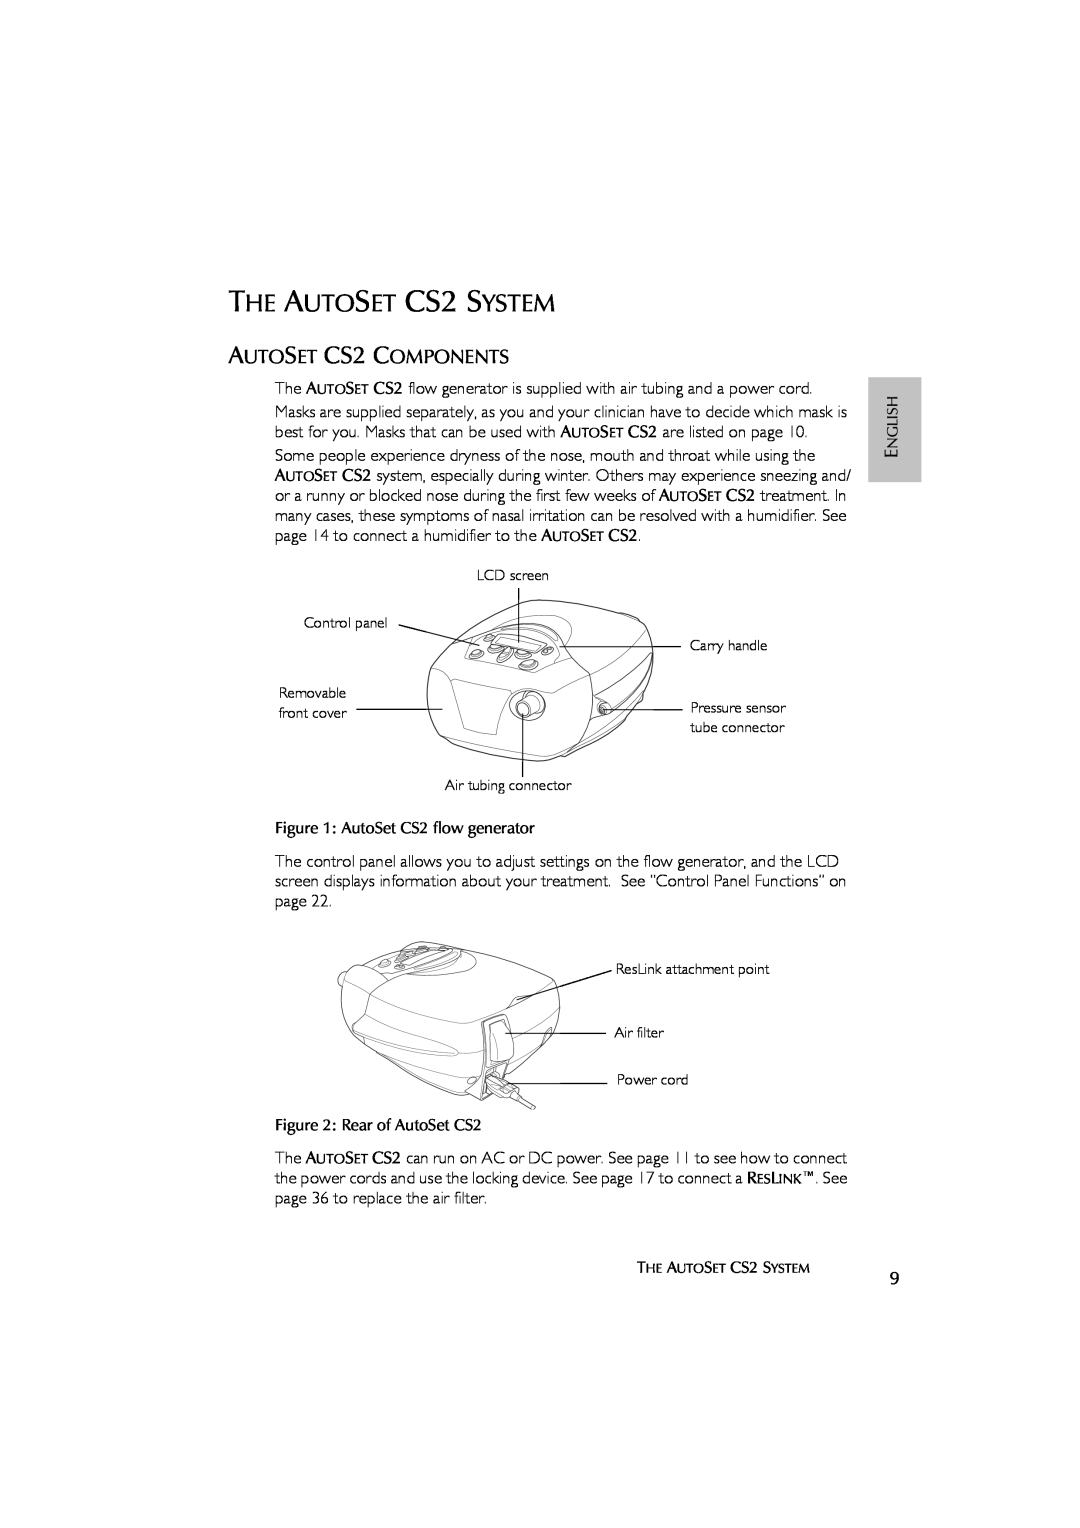 ResMed AutoSet CS 2 user manual THE AUTOSET CS2 SYSTEM, AUTOSET CS2 COMPONENTS 